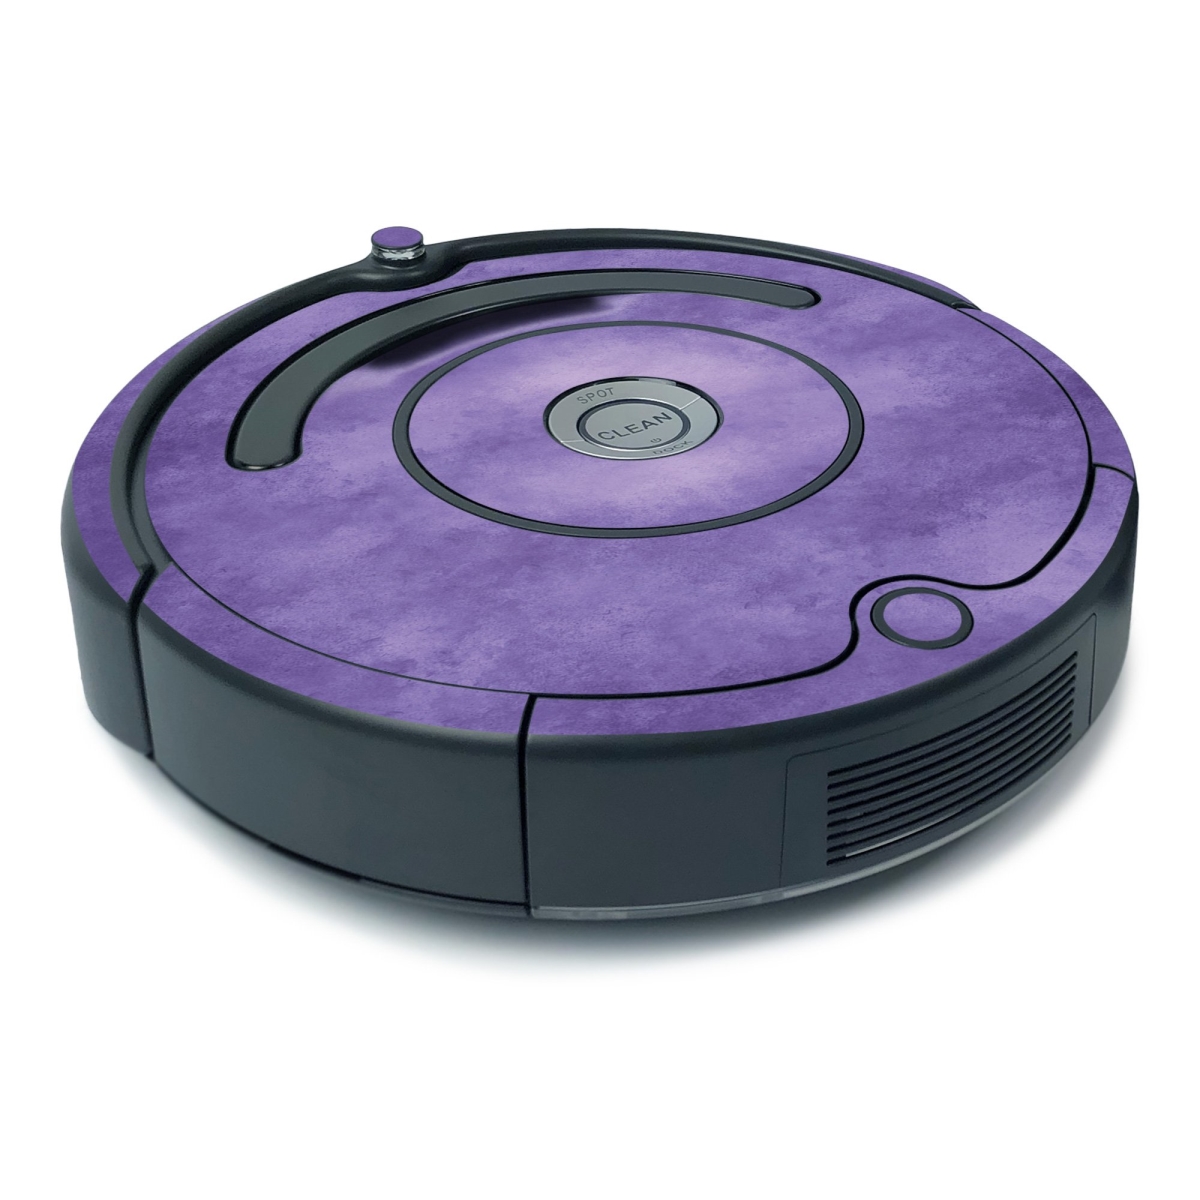 Picture of MightySkins IRRO675MIN-Purple Airbrush Skin Decal Wrap for iRobot Roomba 675 Minimal Coverage Sticker - Purple Airbrush